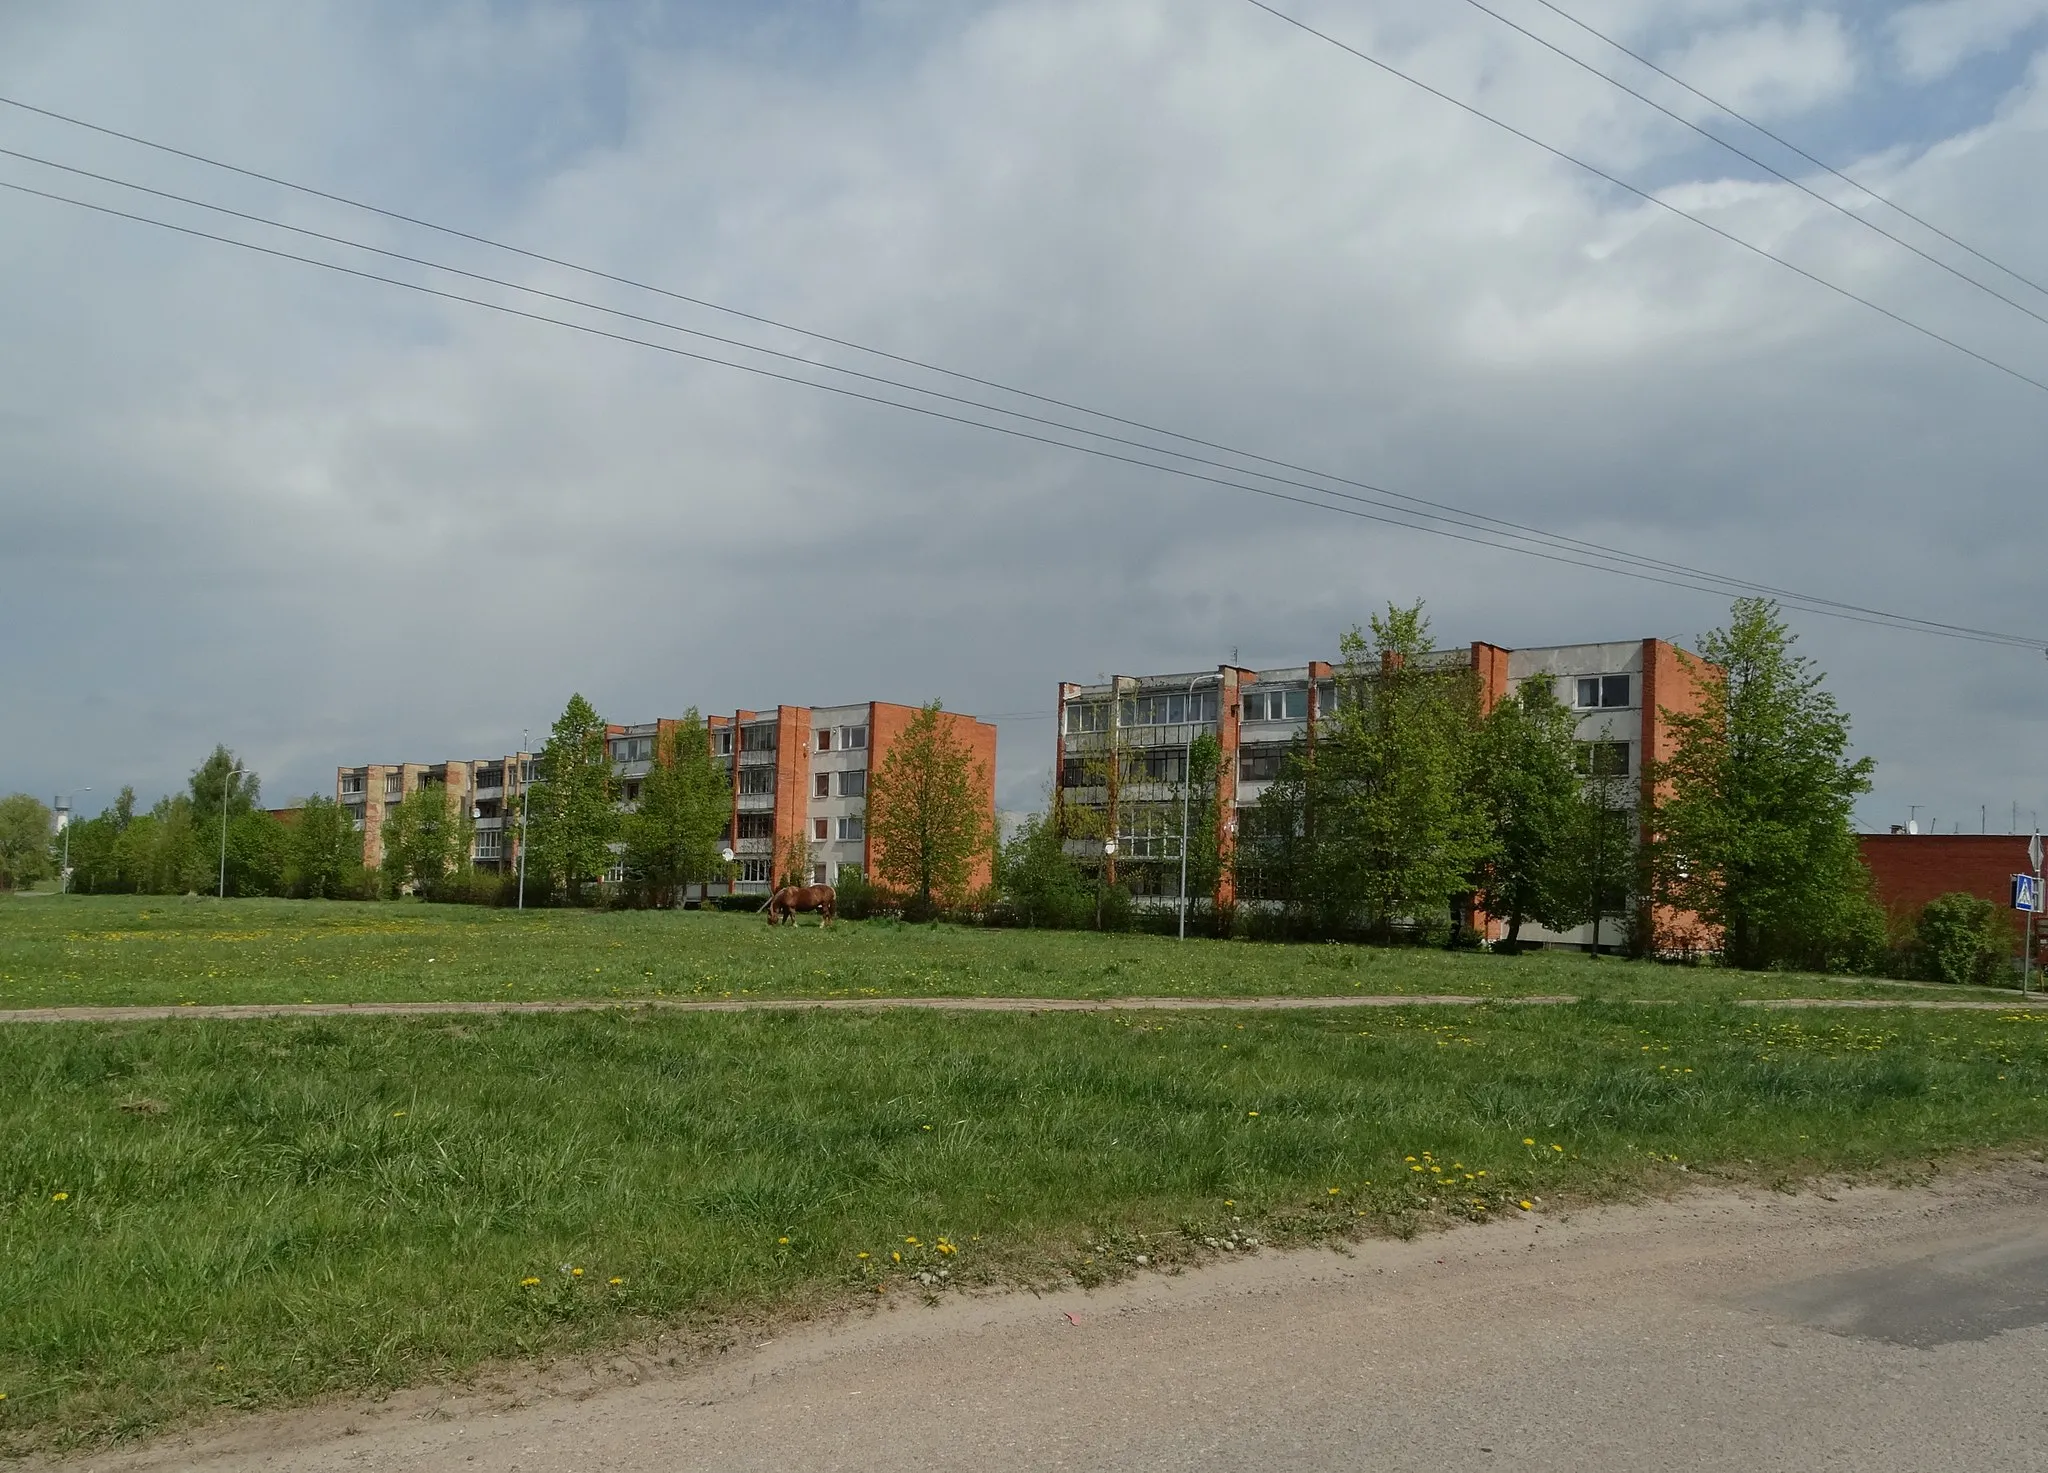 Photo showing: Neveronys, Lithuania